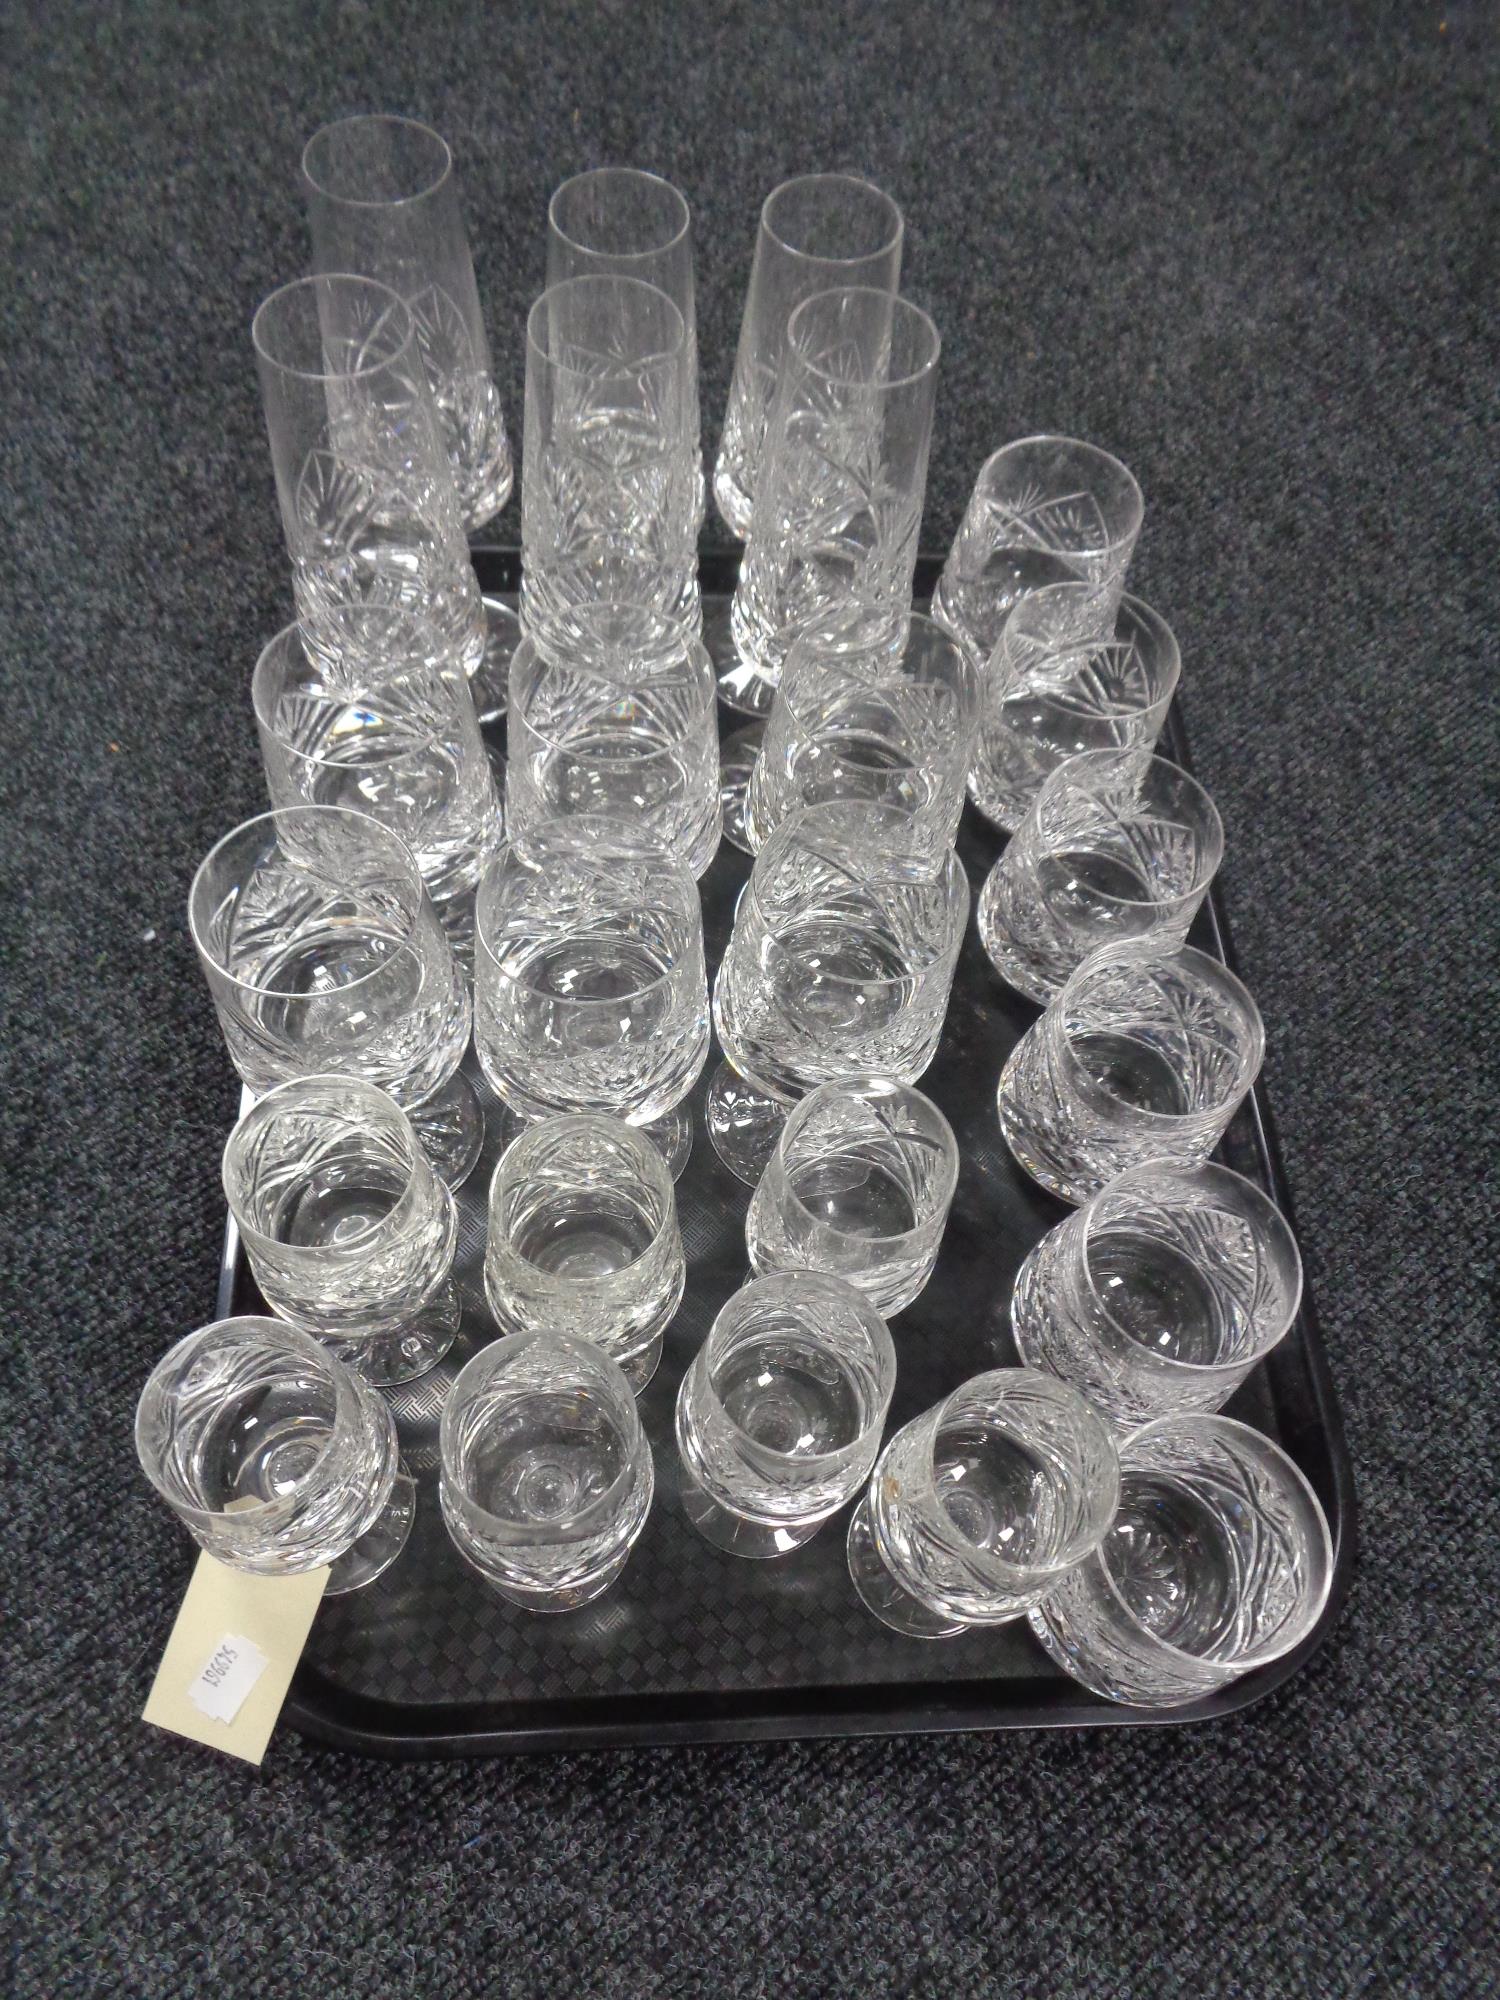 A tray of Irish crystal glass